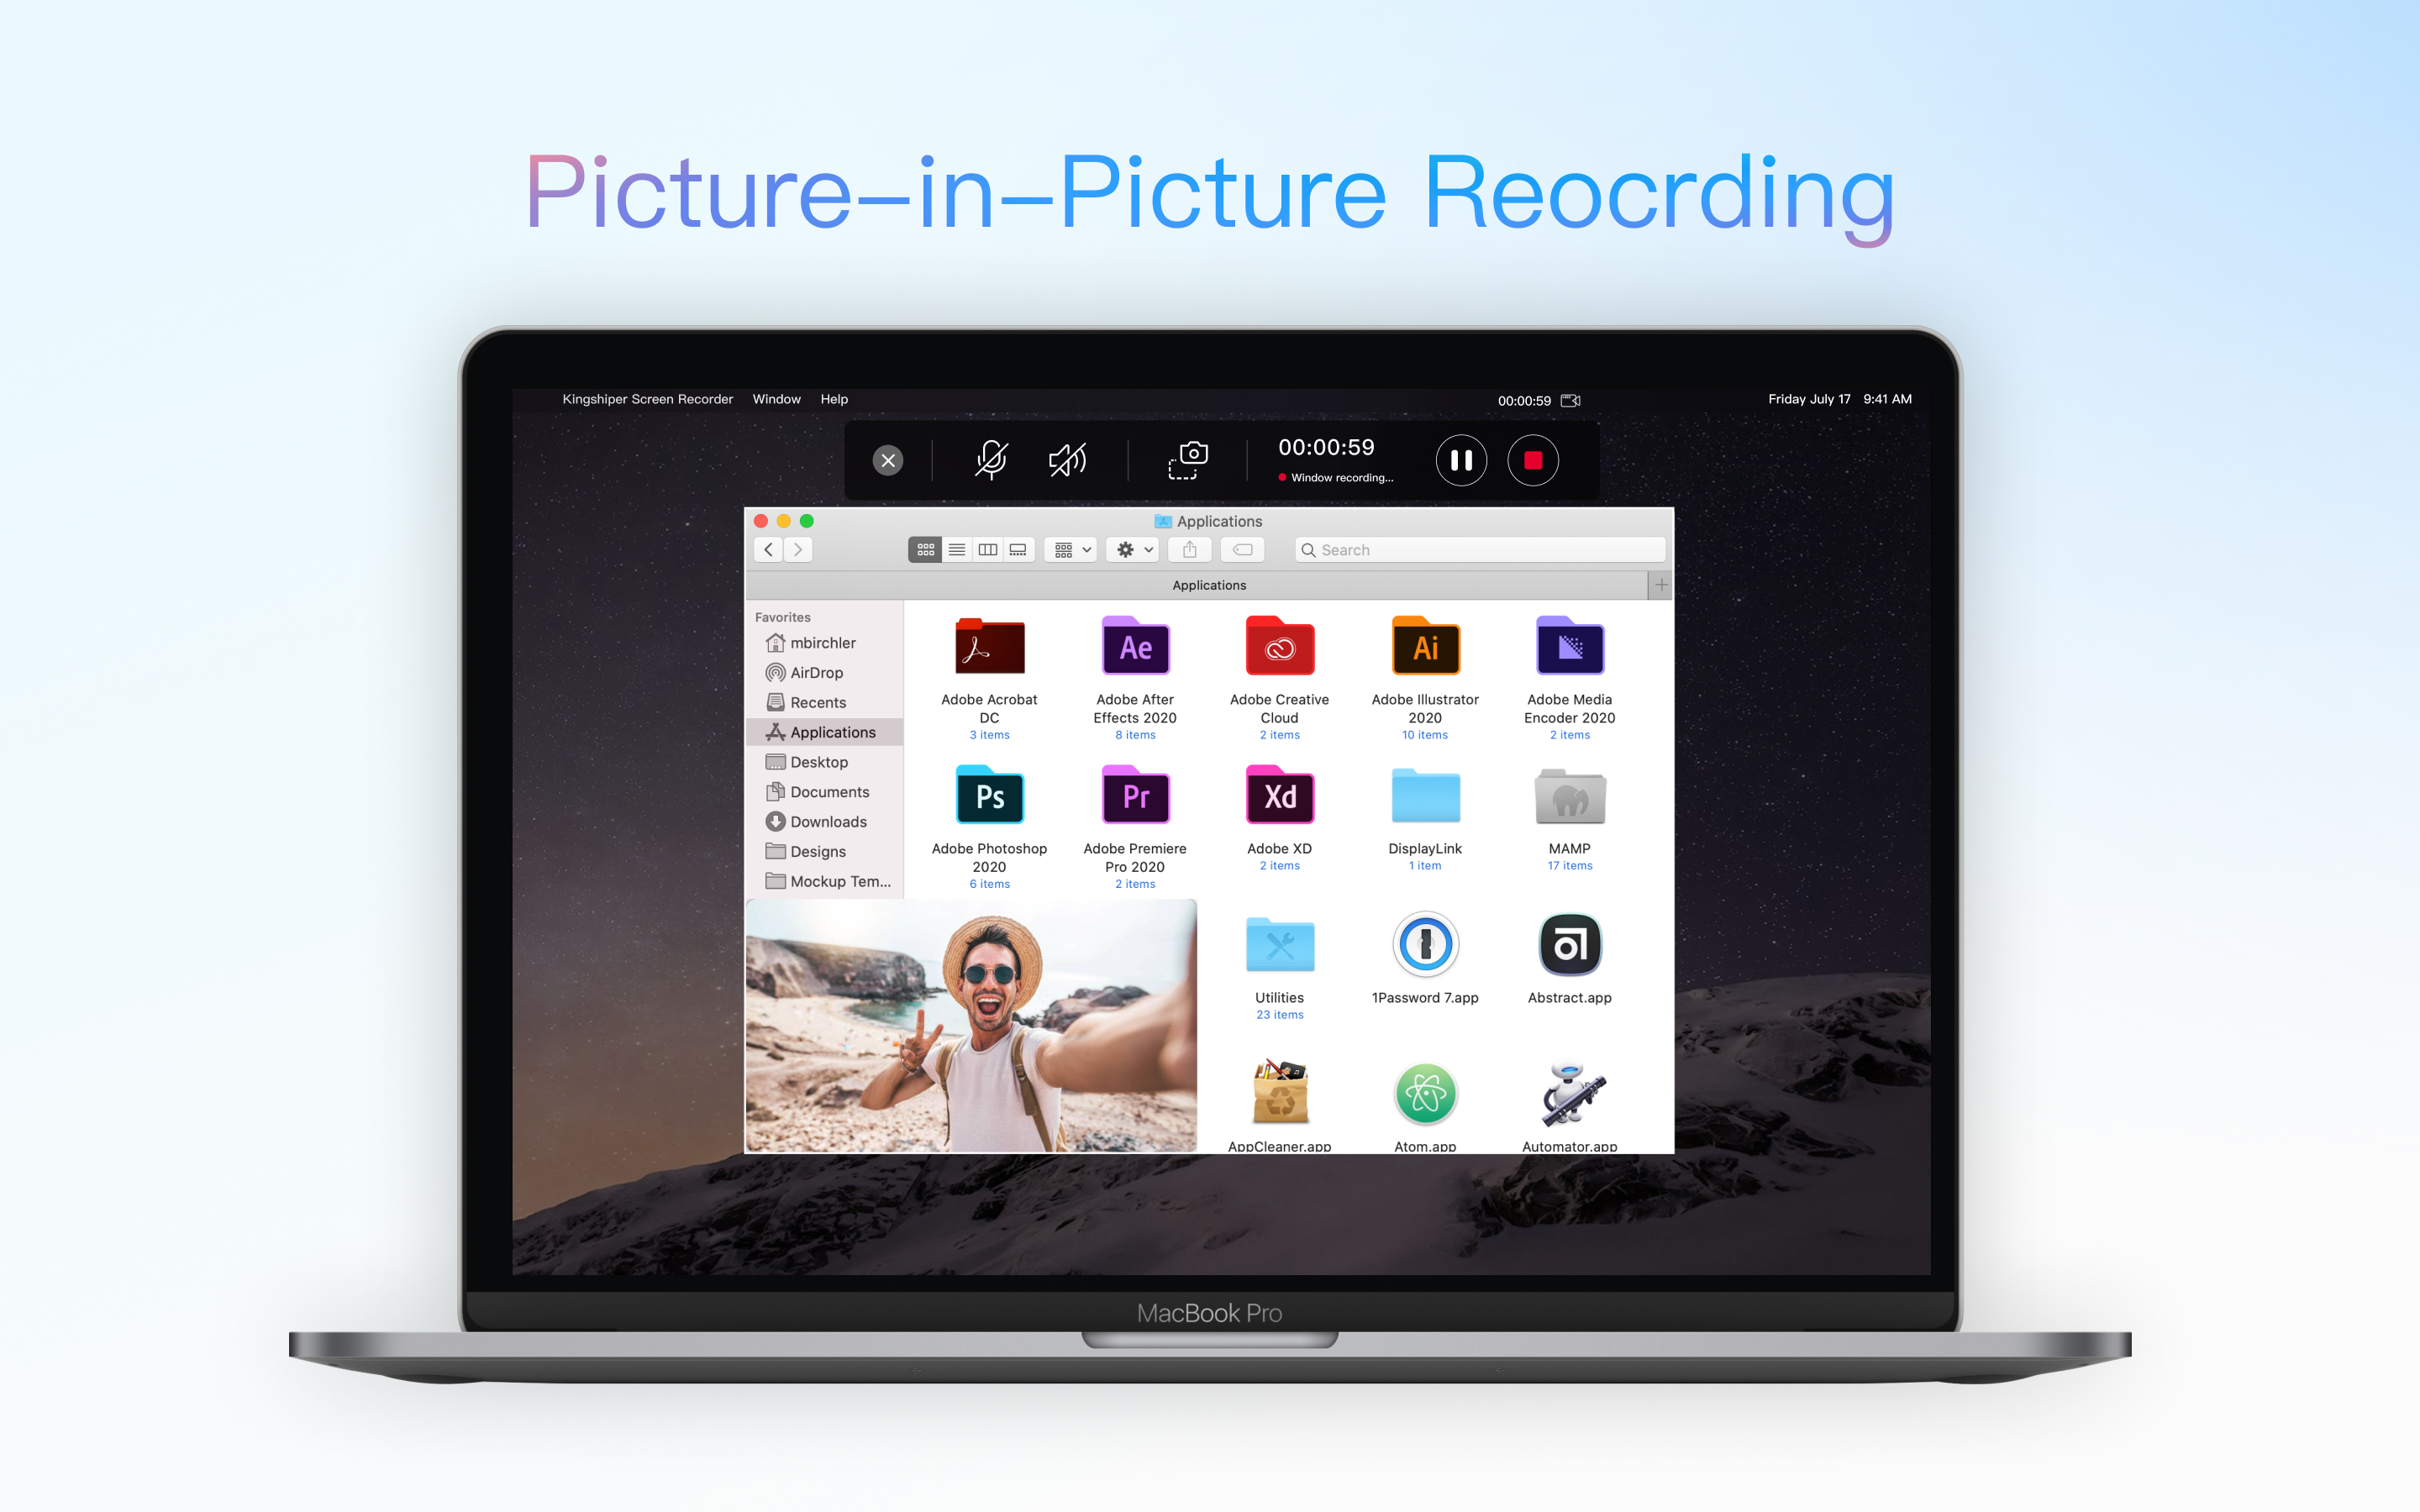 Kingshiper Screen Recorder for Mac 